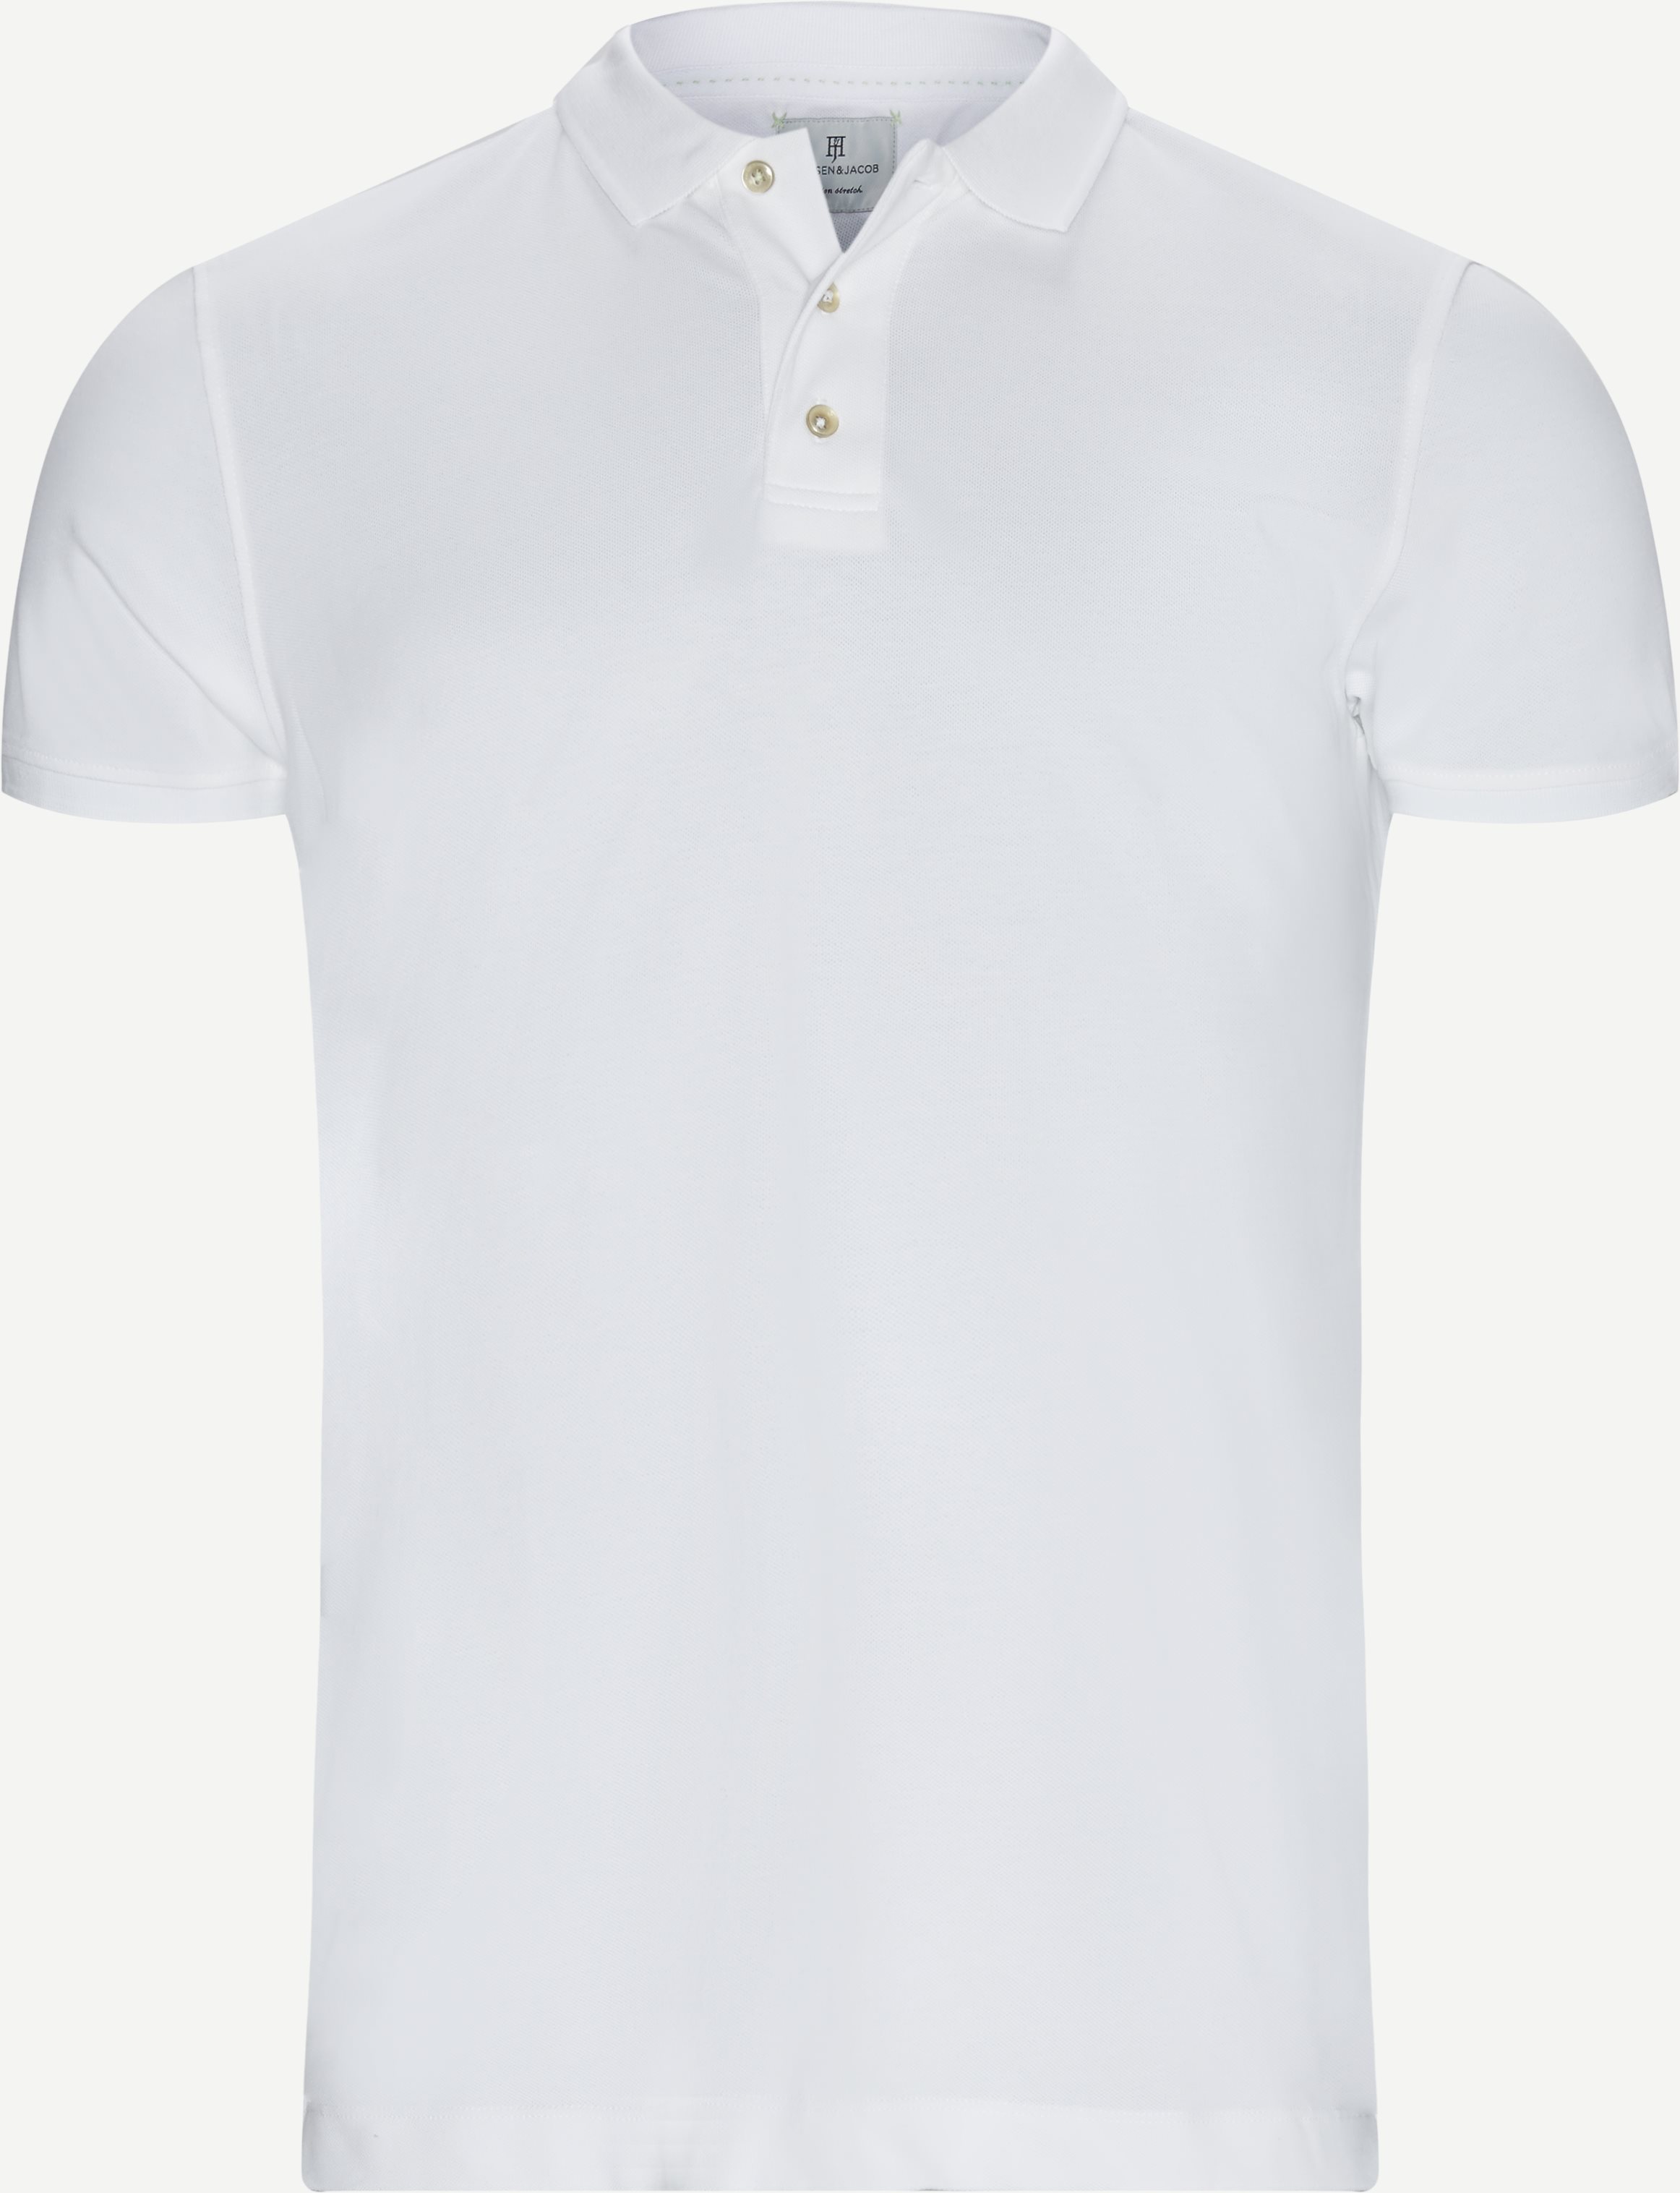 Hansen & Jacob T-shirts 91005 PIQUE STRETCH POLO White